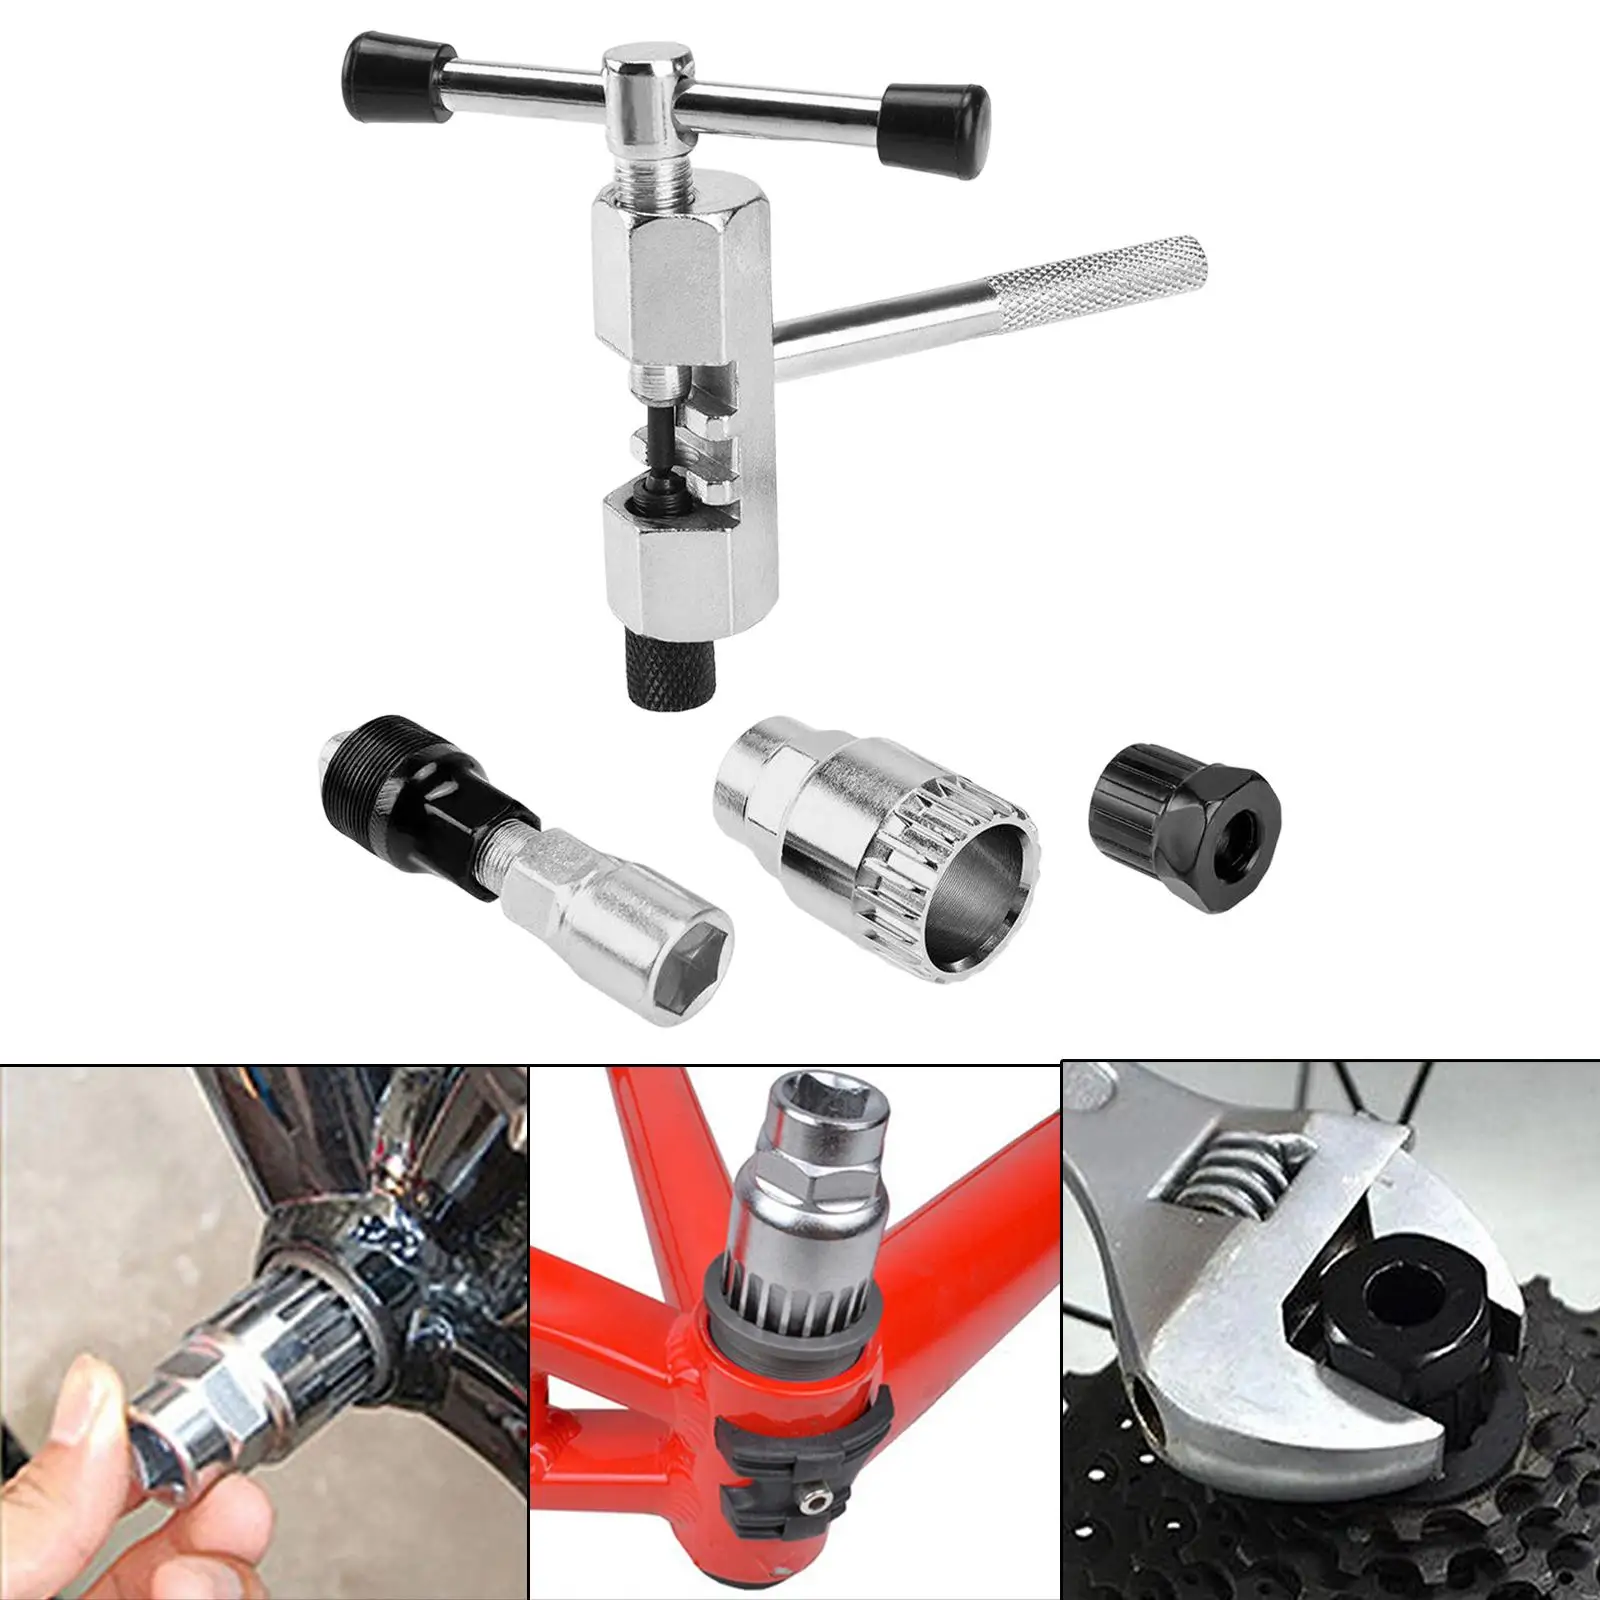 4x Crank Arm Puller Freewheel Kit Chain Bottom Bracket Tool for Bicycle Outdoor MTB Road BMX Bike